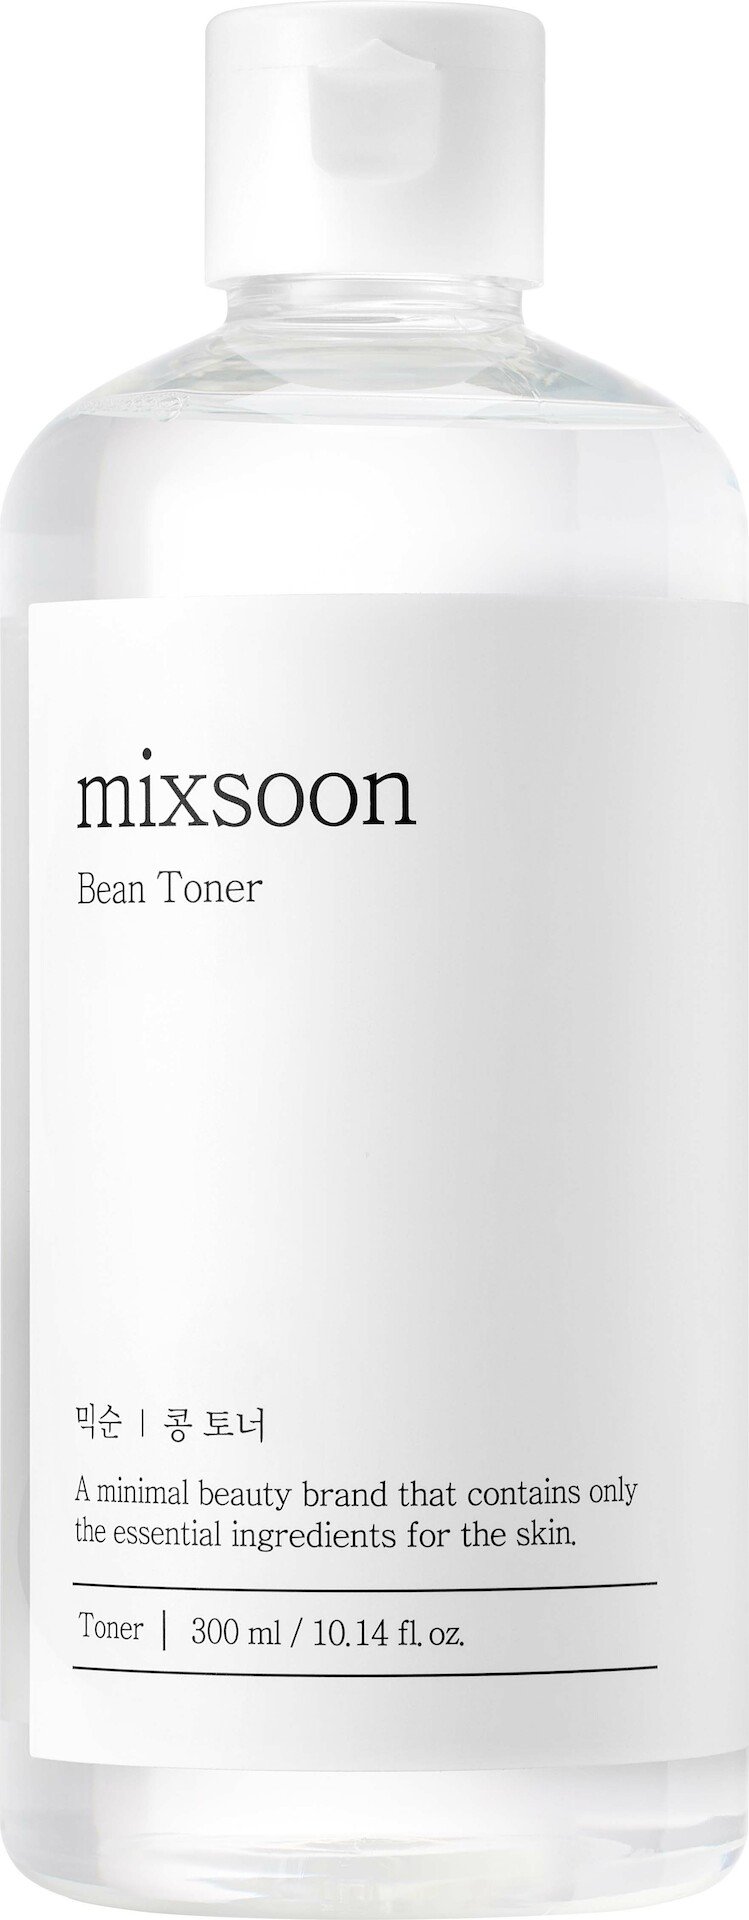 Mixsoon Bean Toner 300ml